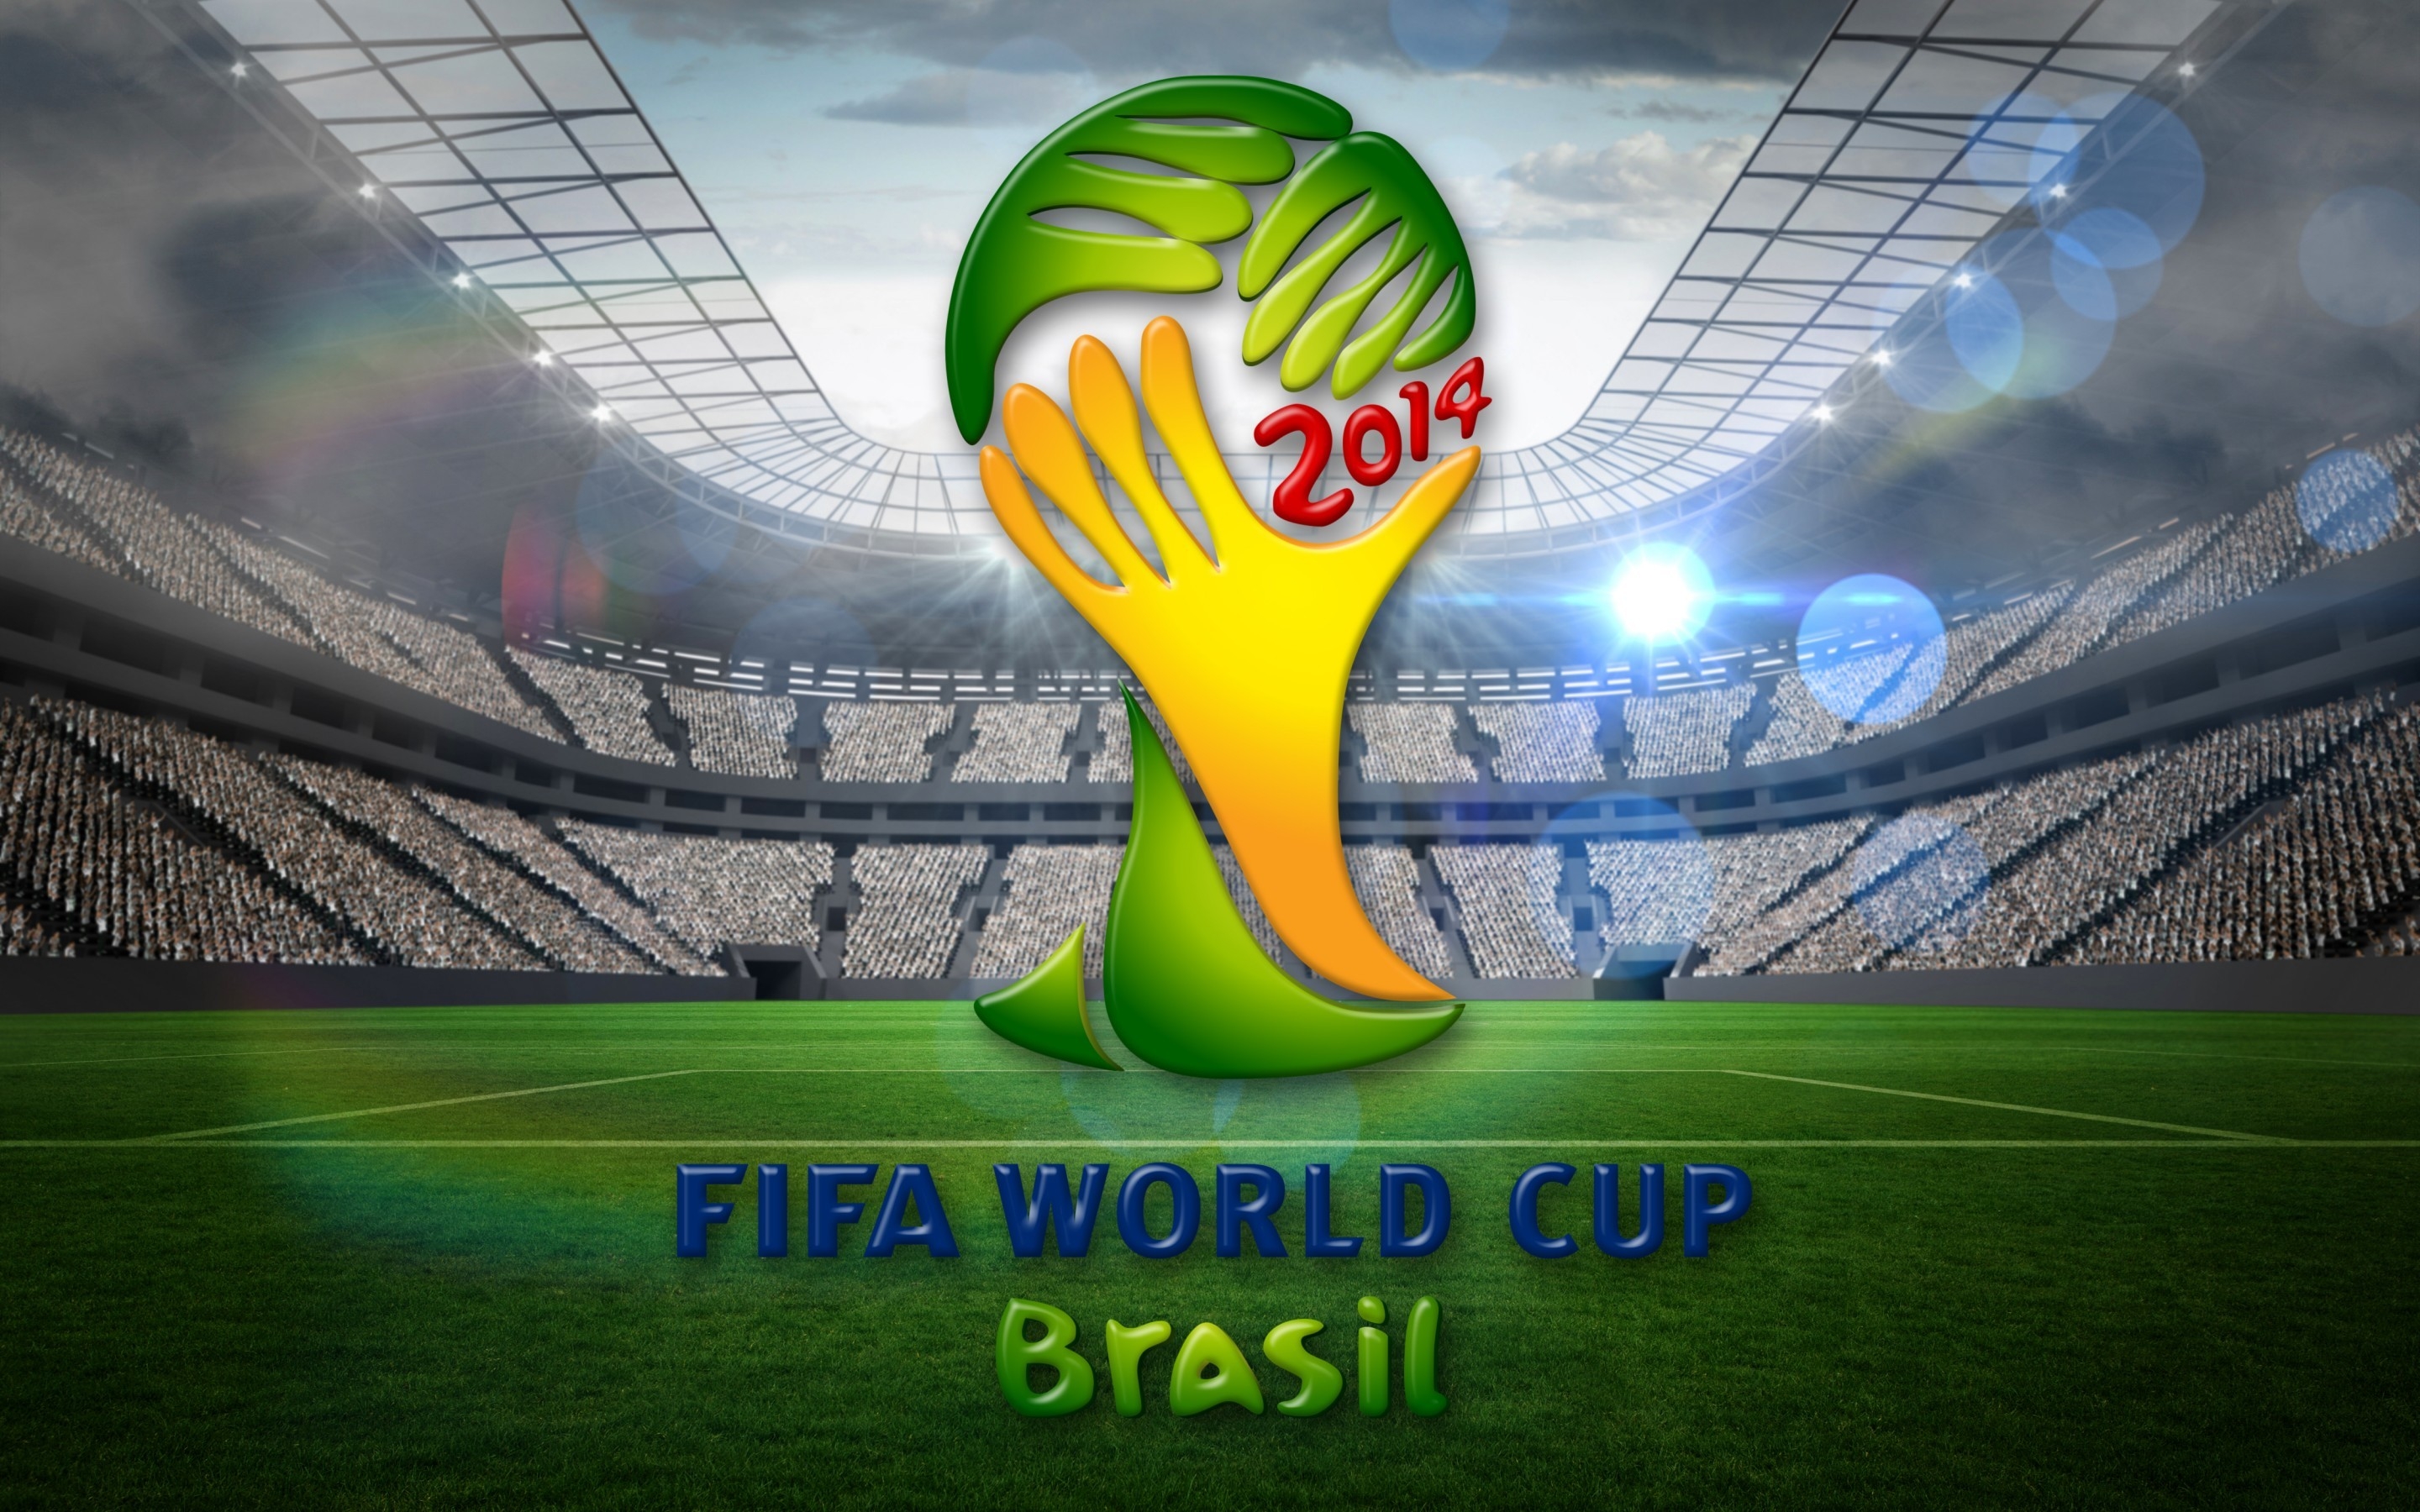 2014 Brasil World Cup for 2880 x 1800 Retina Display resolution